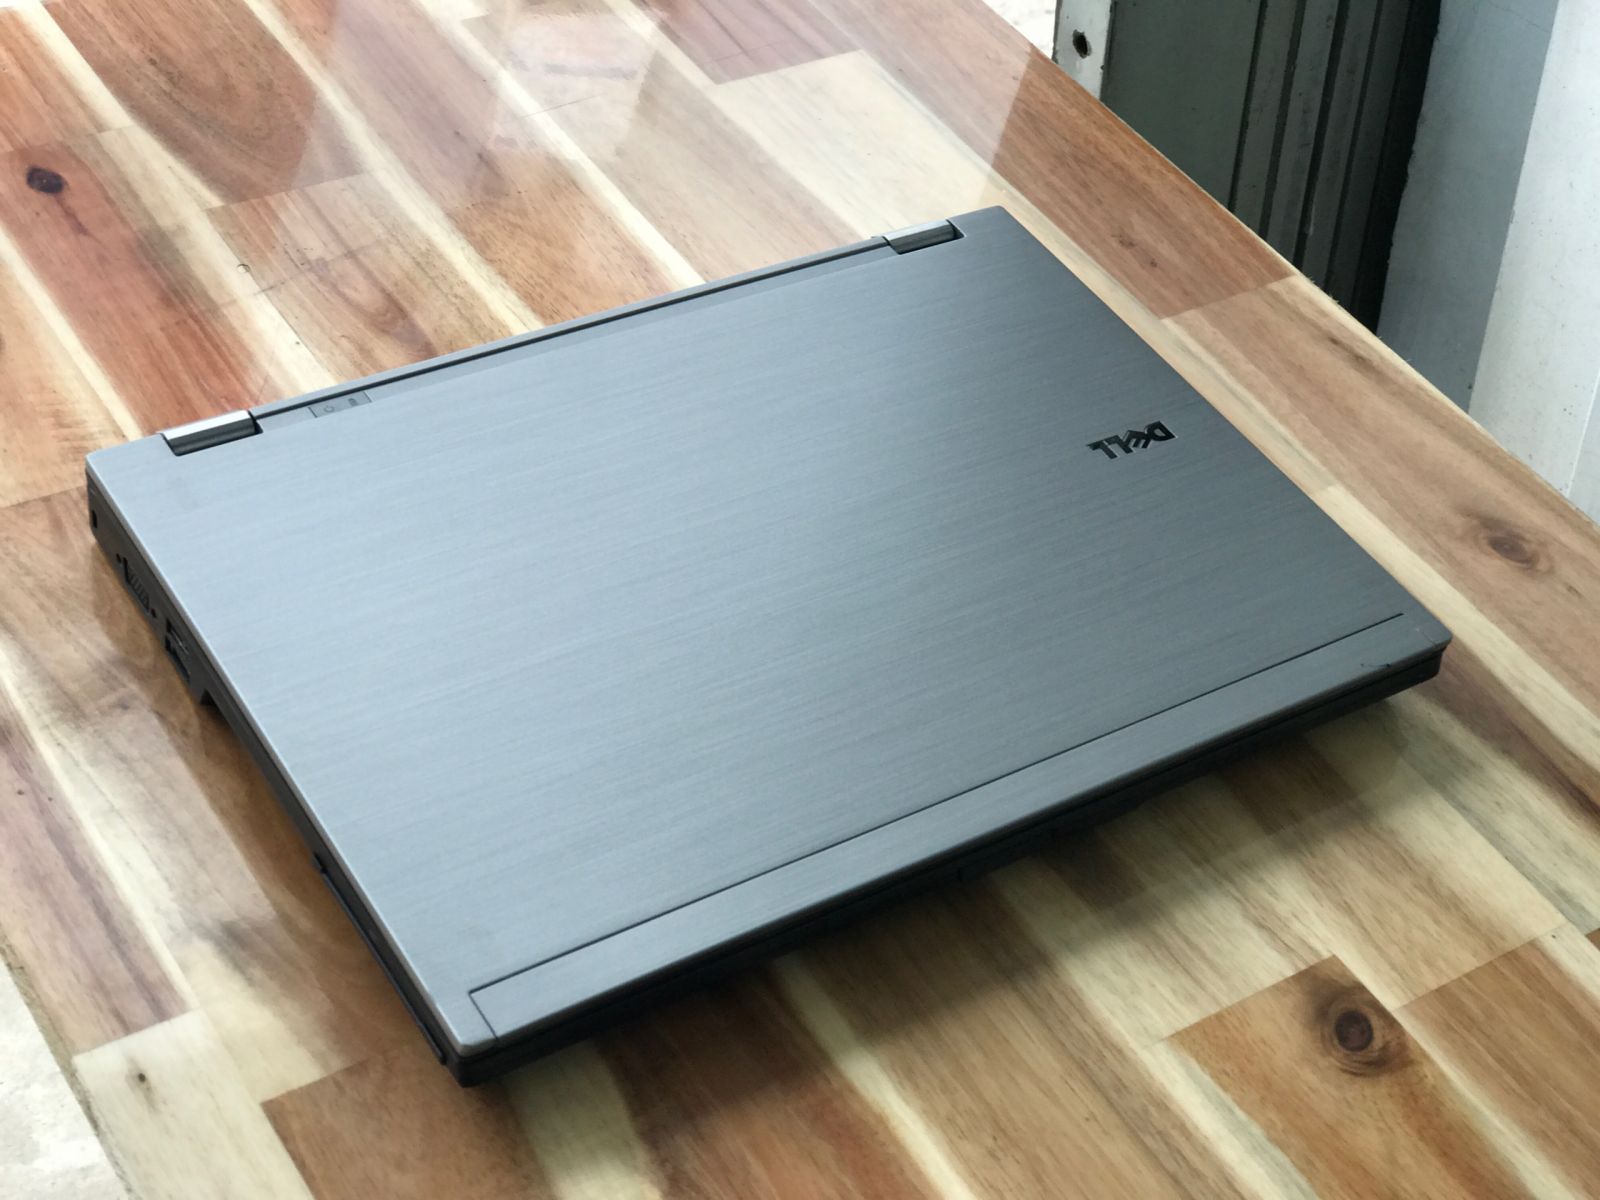 Laptop Dell Latitude E6410, i5 M520 4G 500G Đẹp zin 100% Giá rẻ - 3